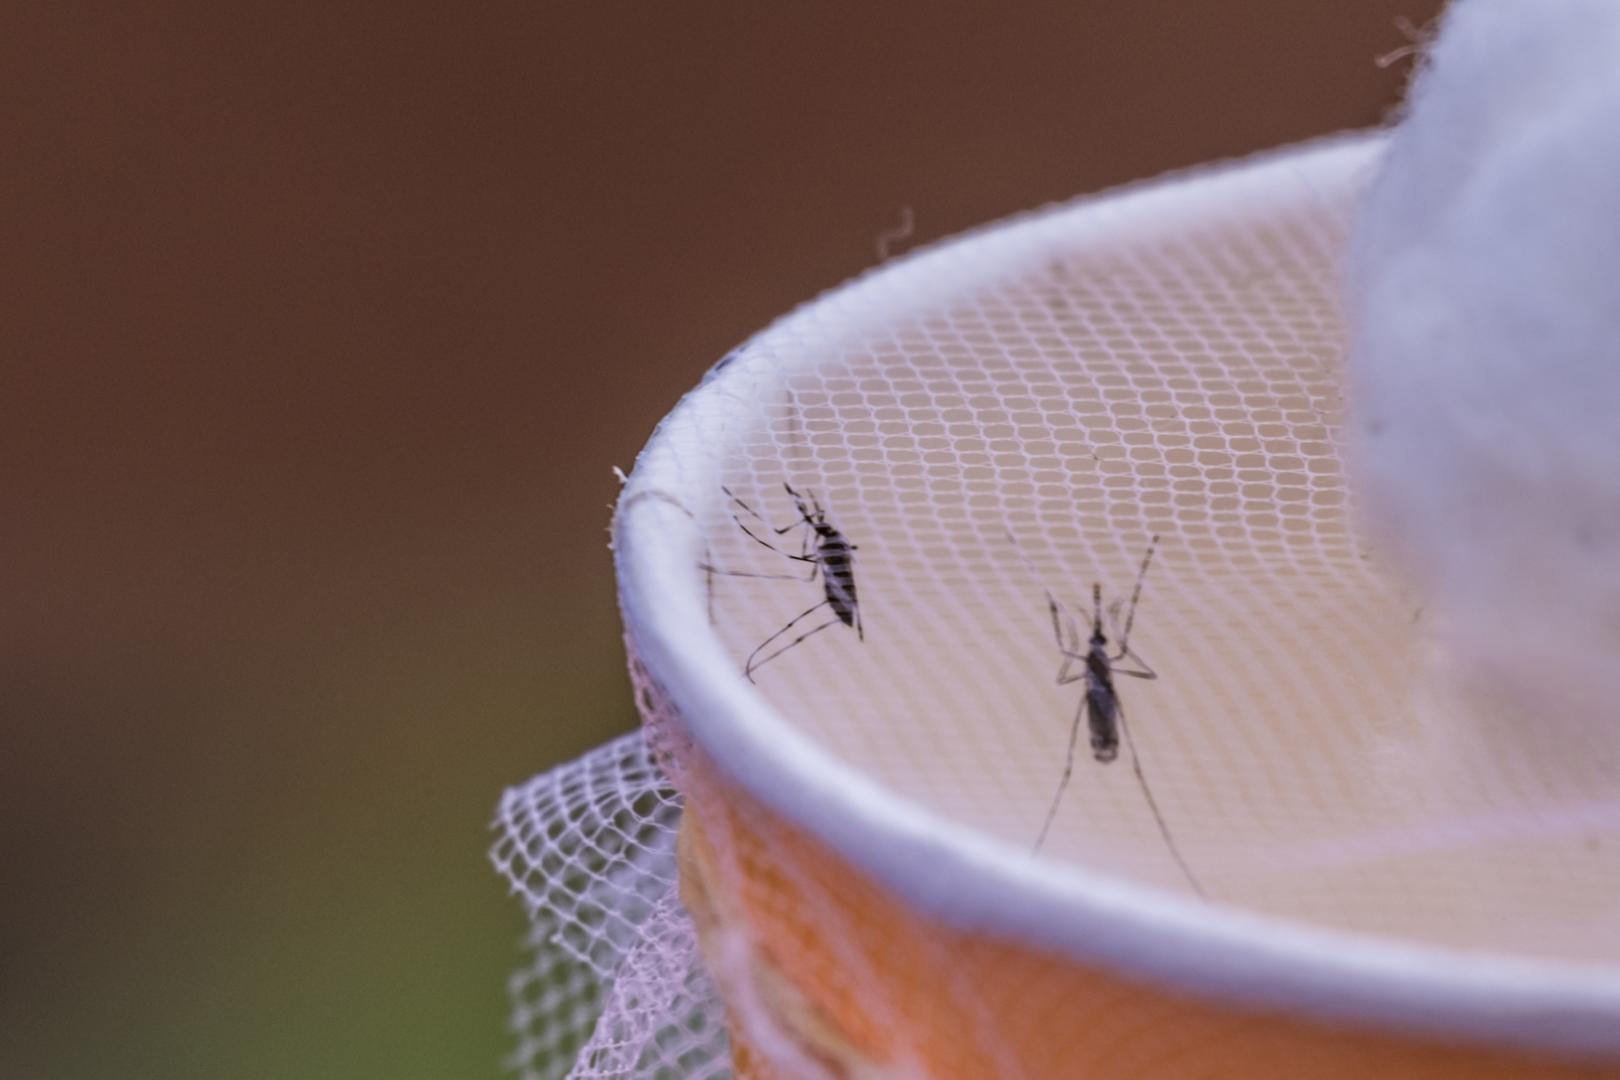 Tackling malaria in Mali through stronger surveillance